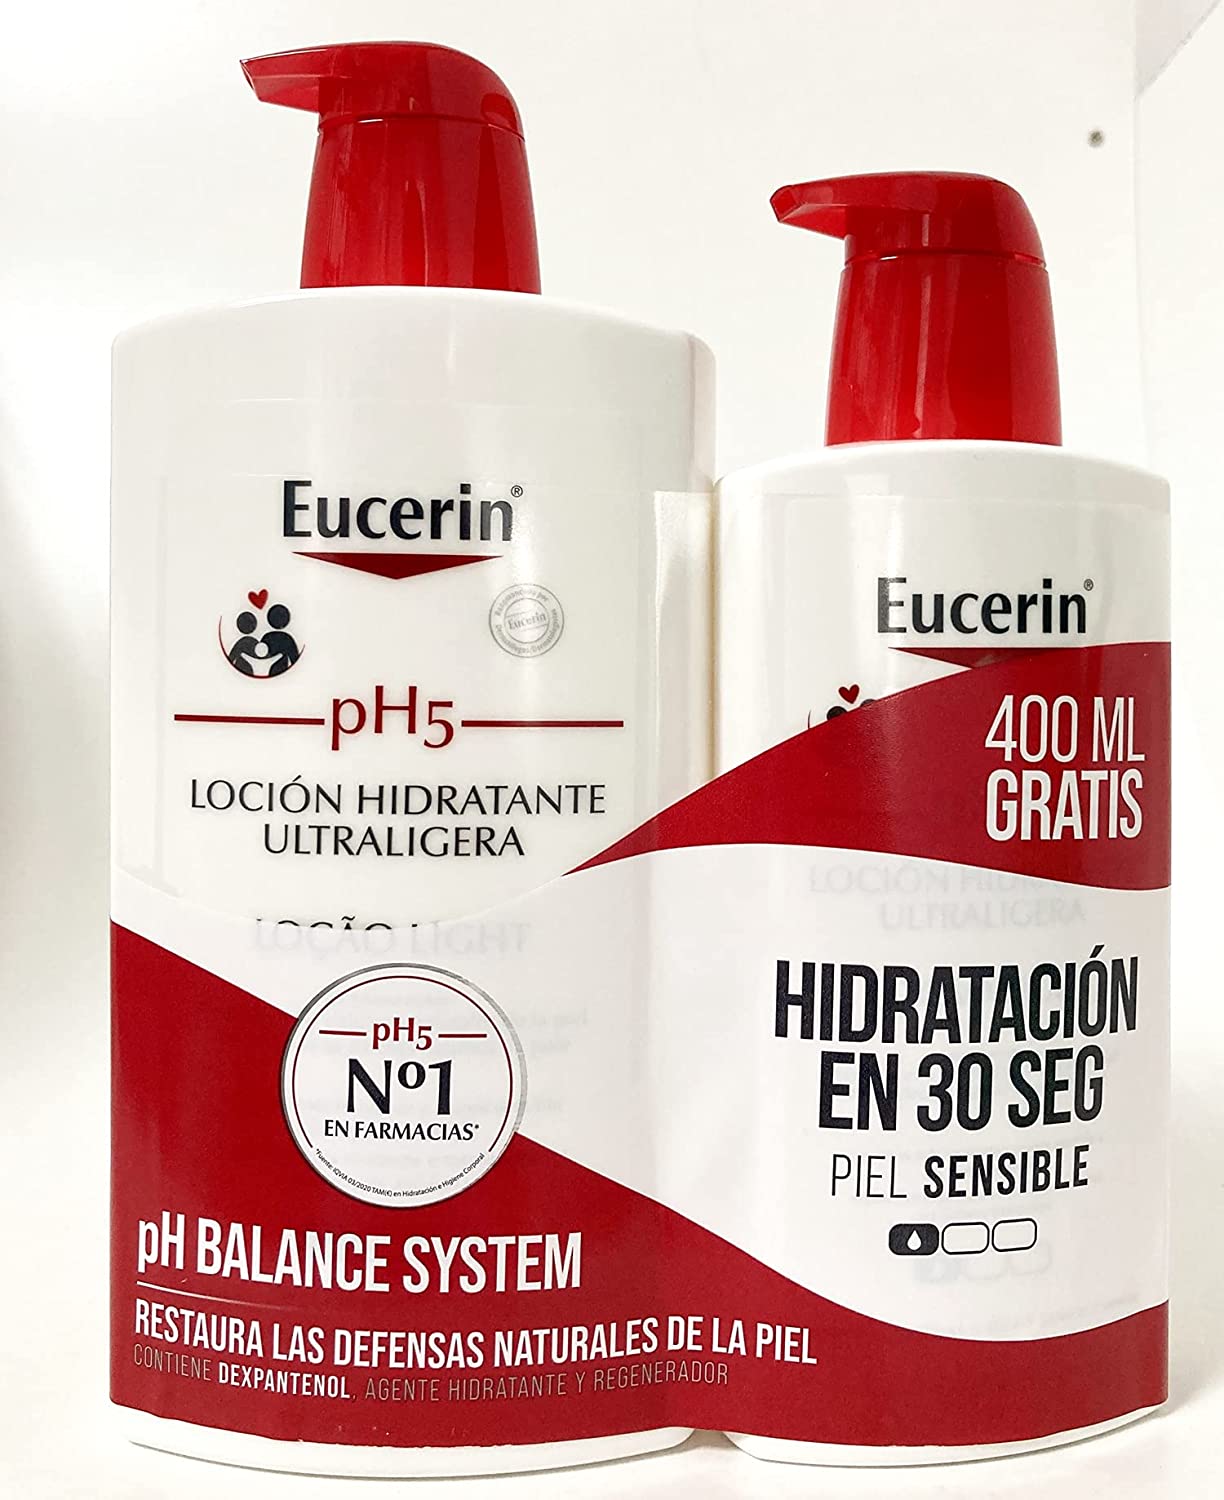 Eucerin Family Pack Ultralight Lotion 1000 ml + 400 ml